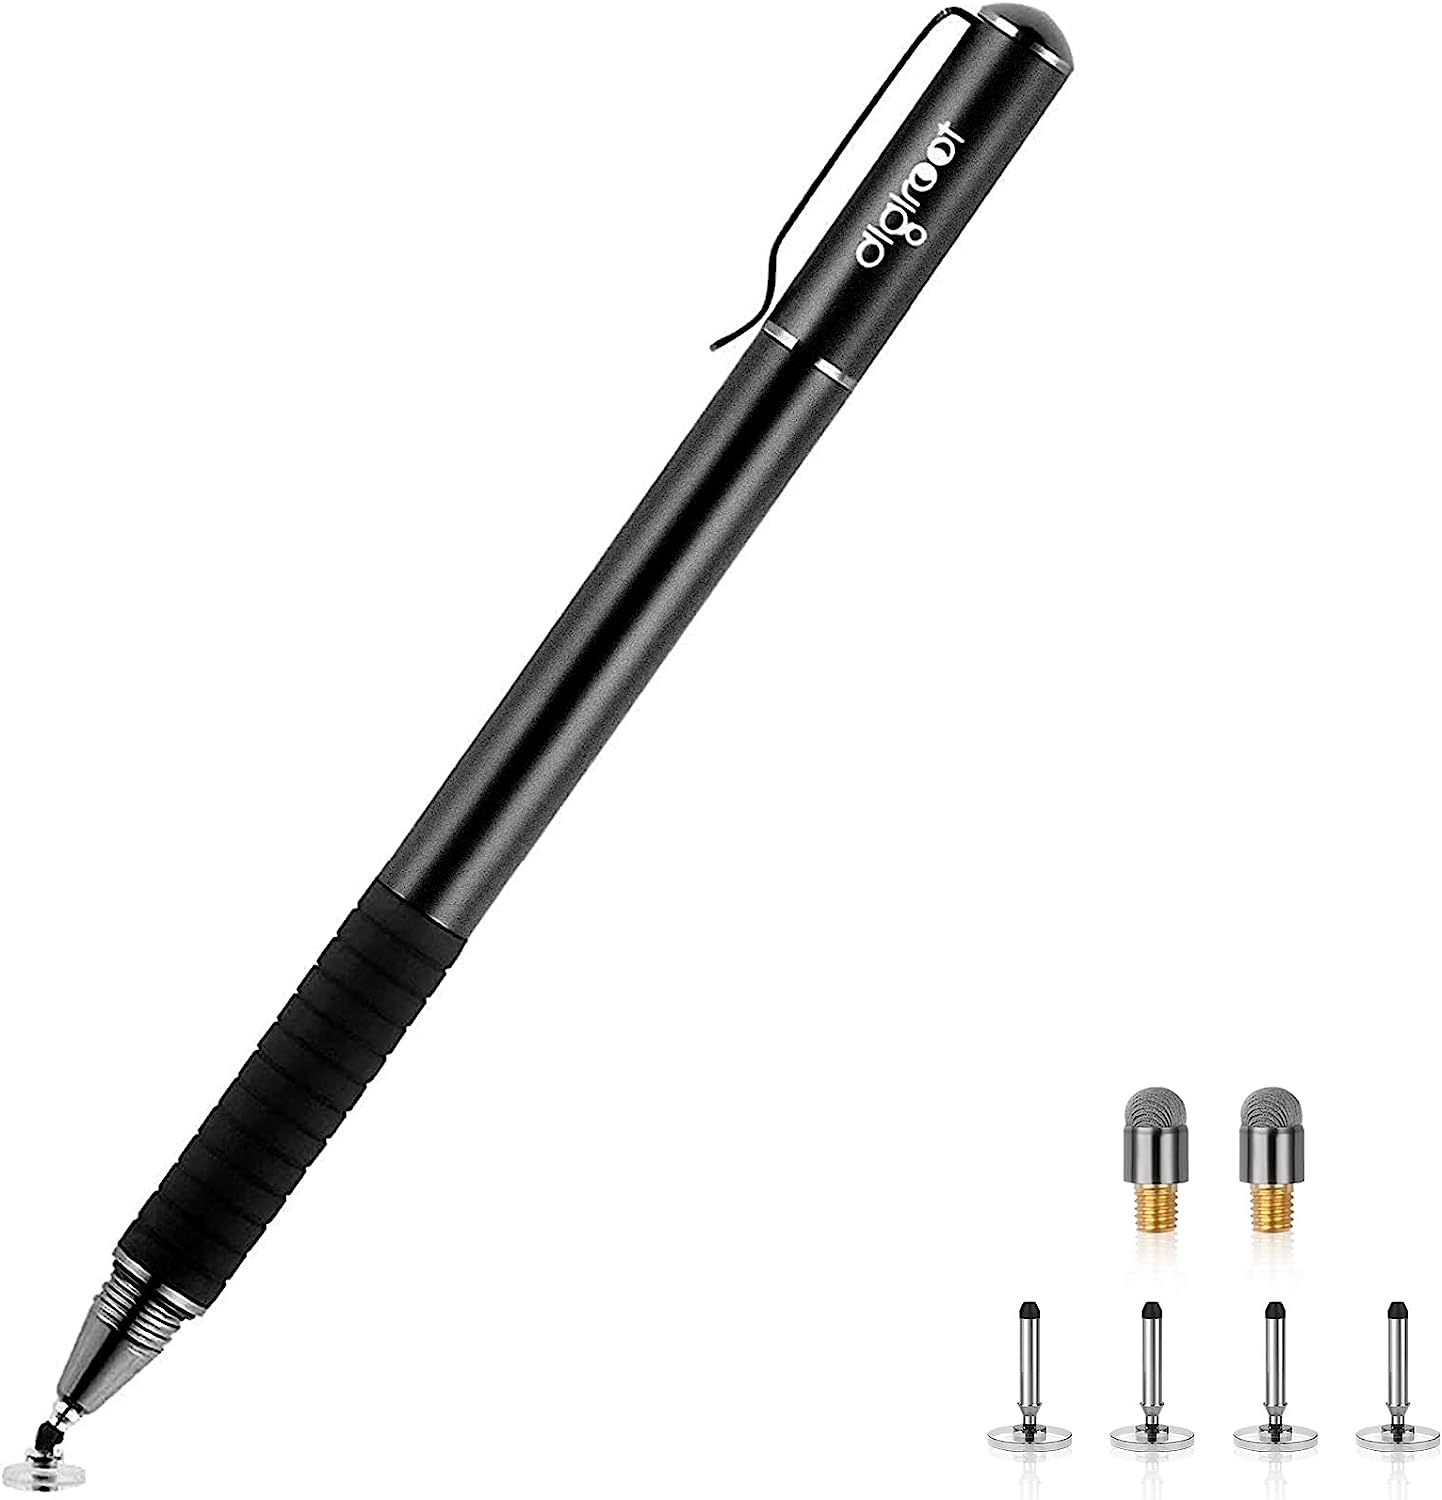 stylus pen for touch screen laptop product comparison